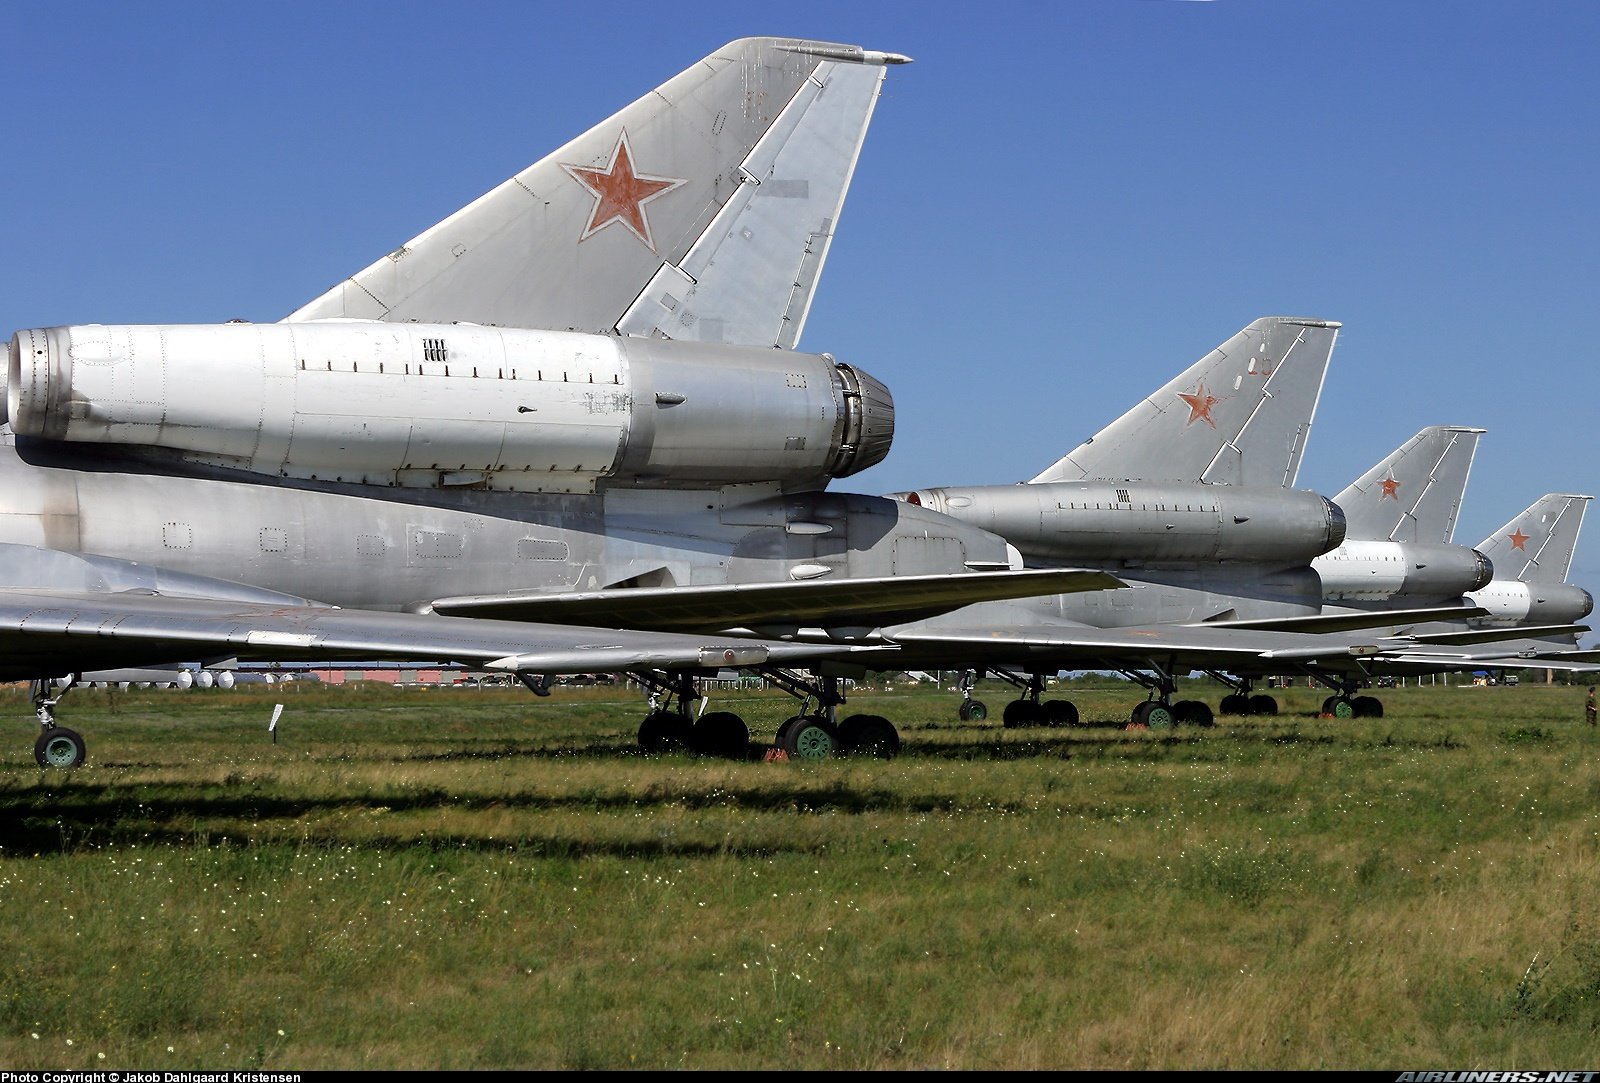 Ту 22 п. Ту-22м сверхзвуковой самолёт. Ту 22. Ту-22рдм. Ту-22 бомбардировщик.